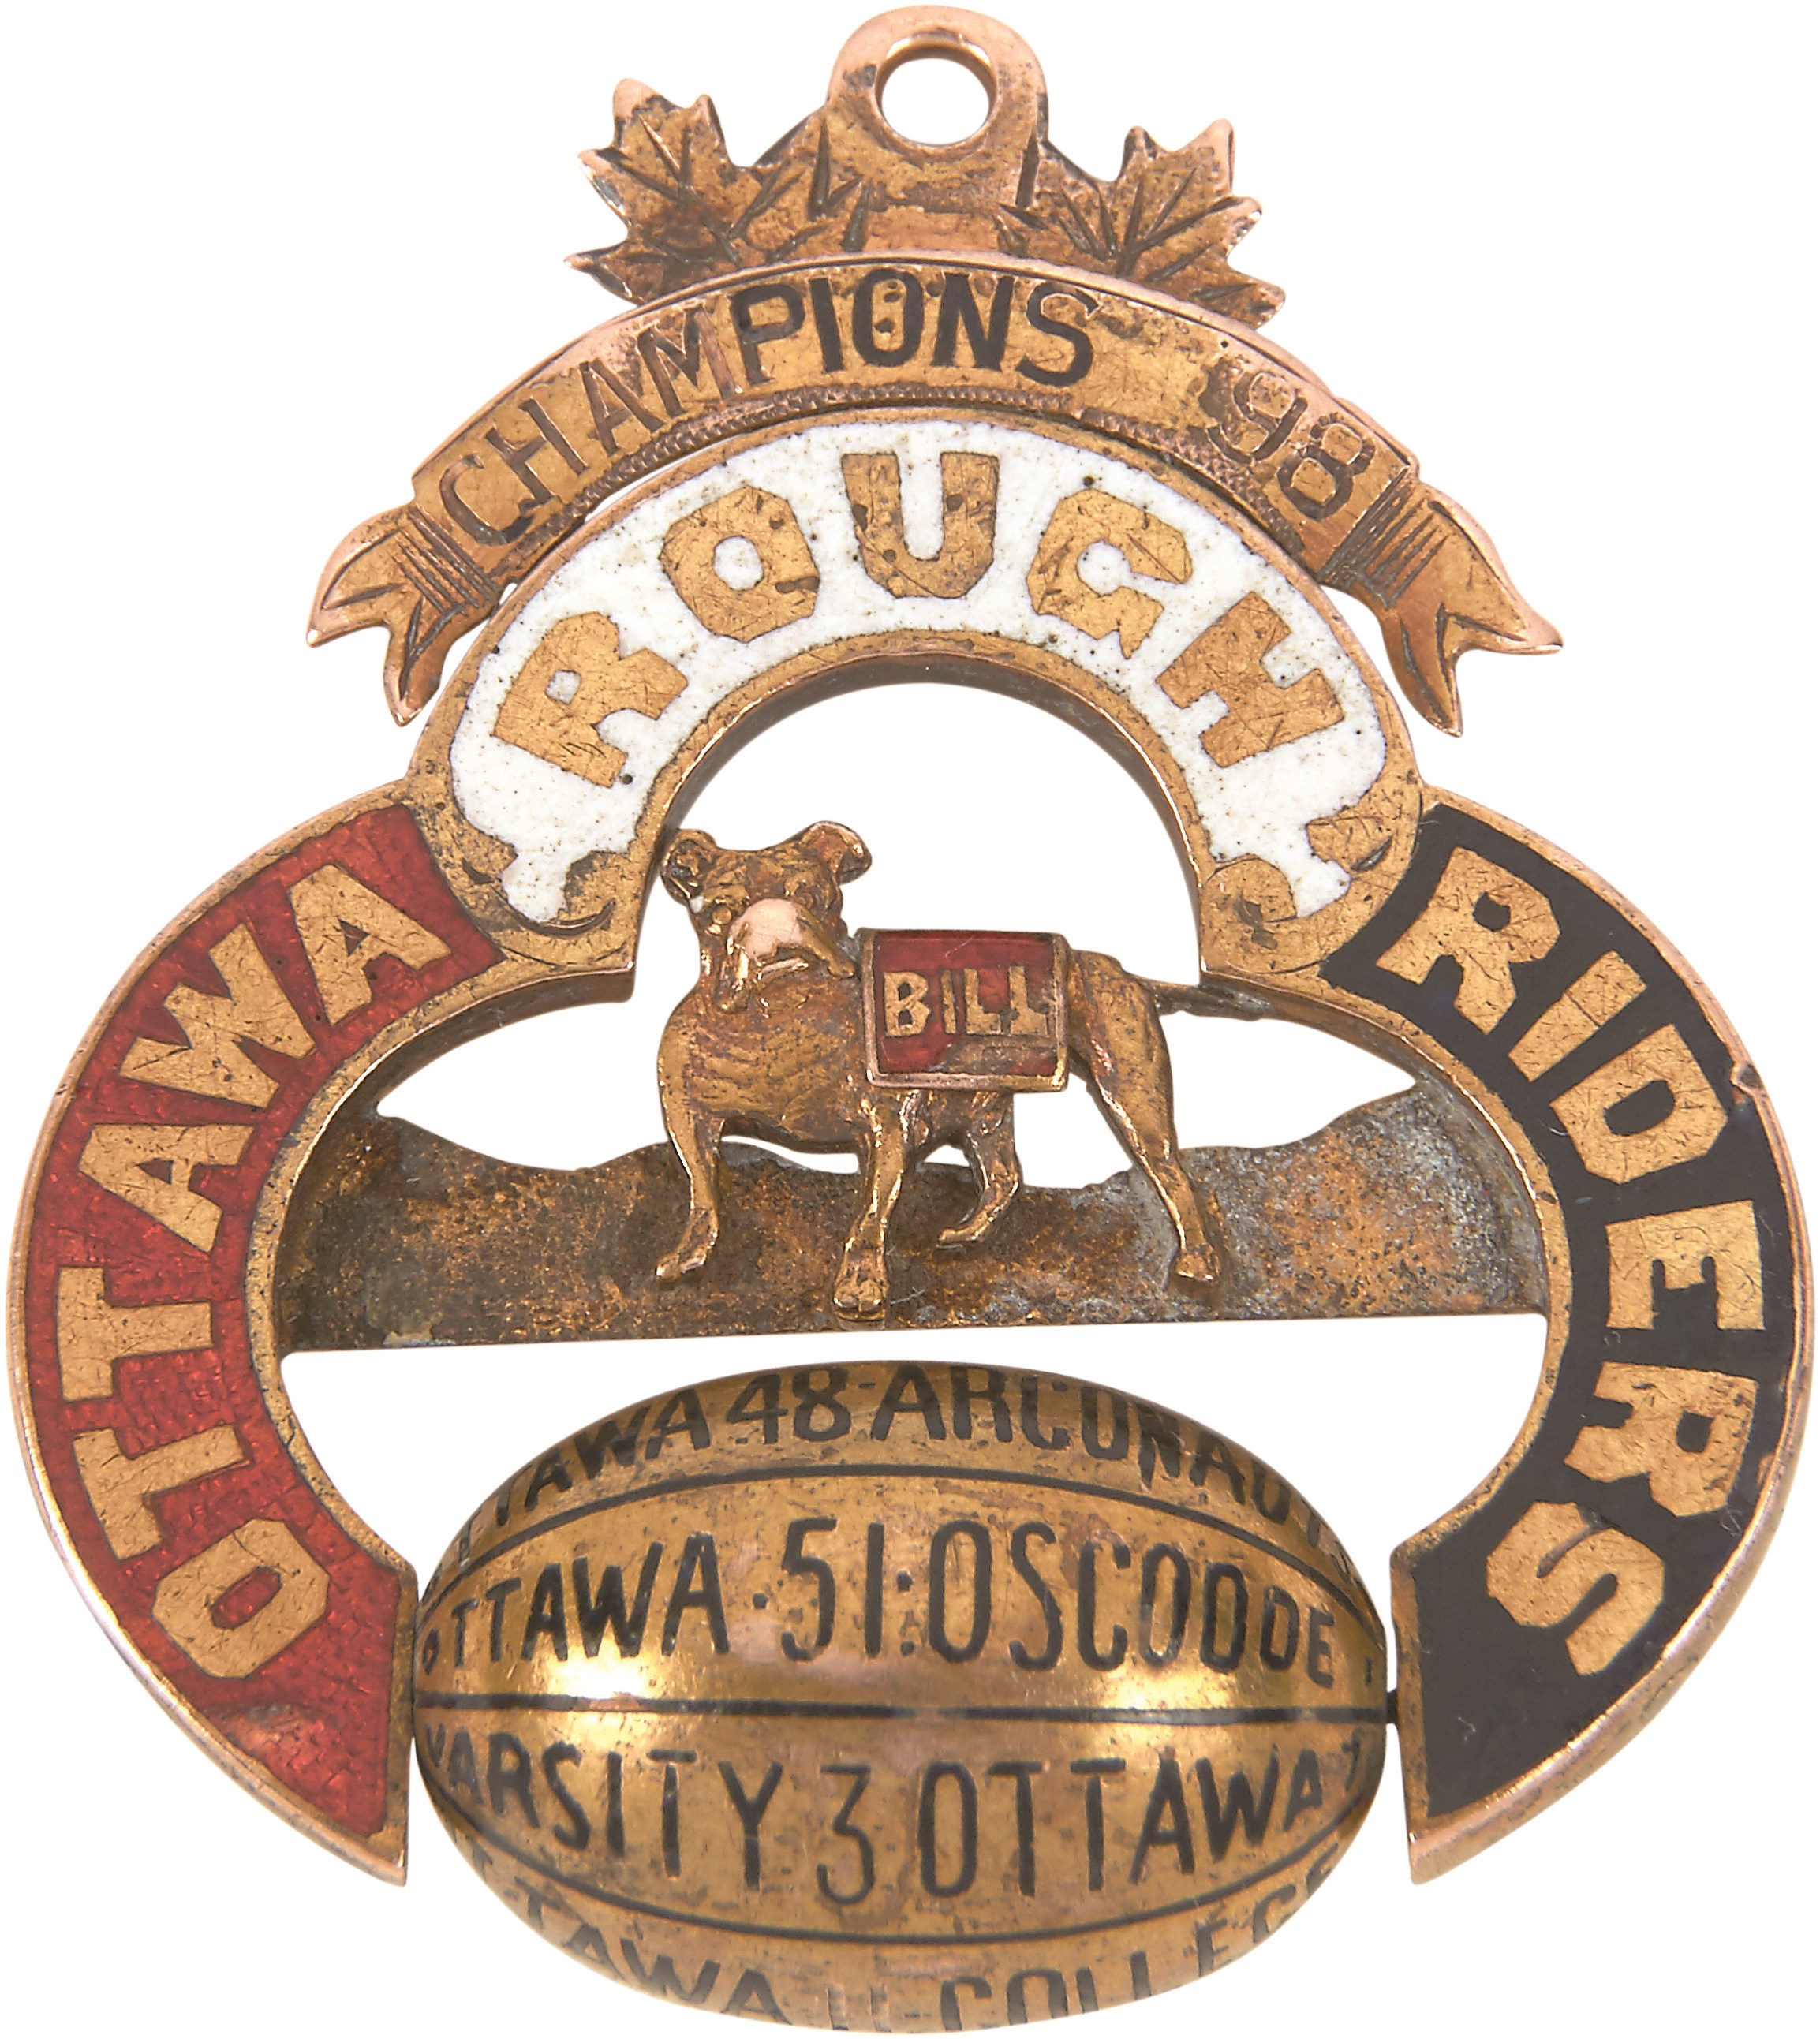 Football - First Ever Ottawa Rough Riders Football Championship Medal (1898)